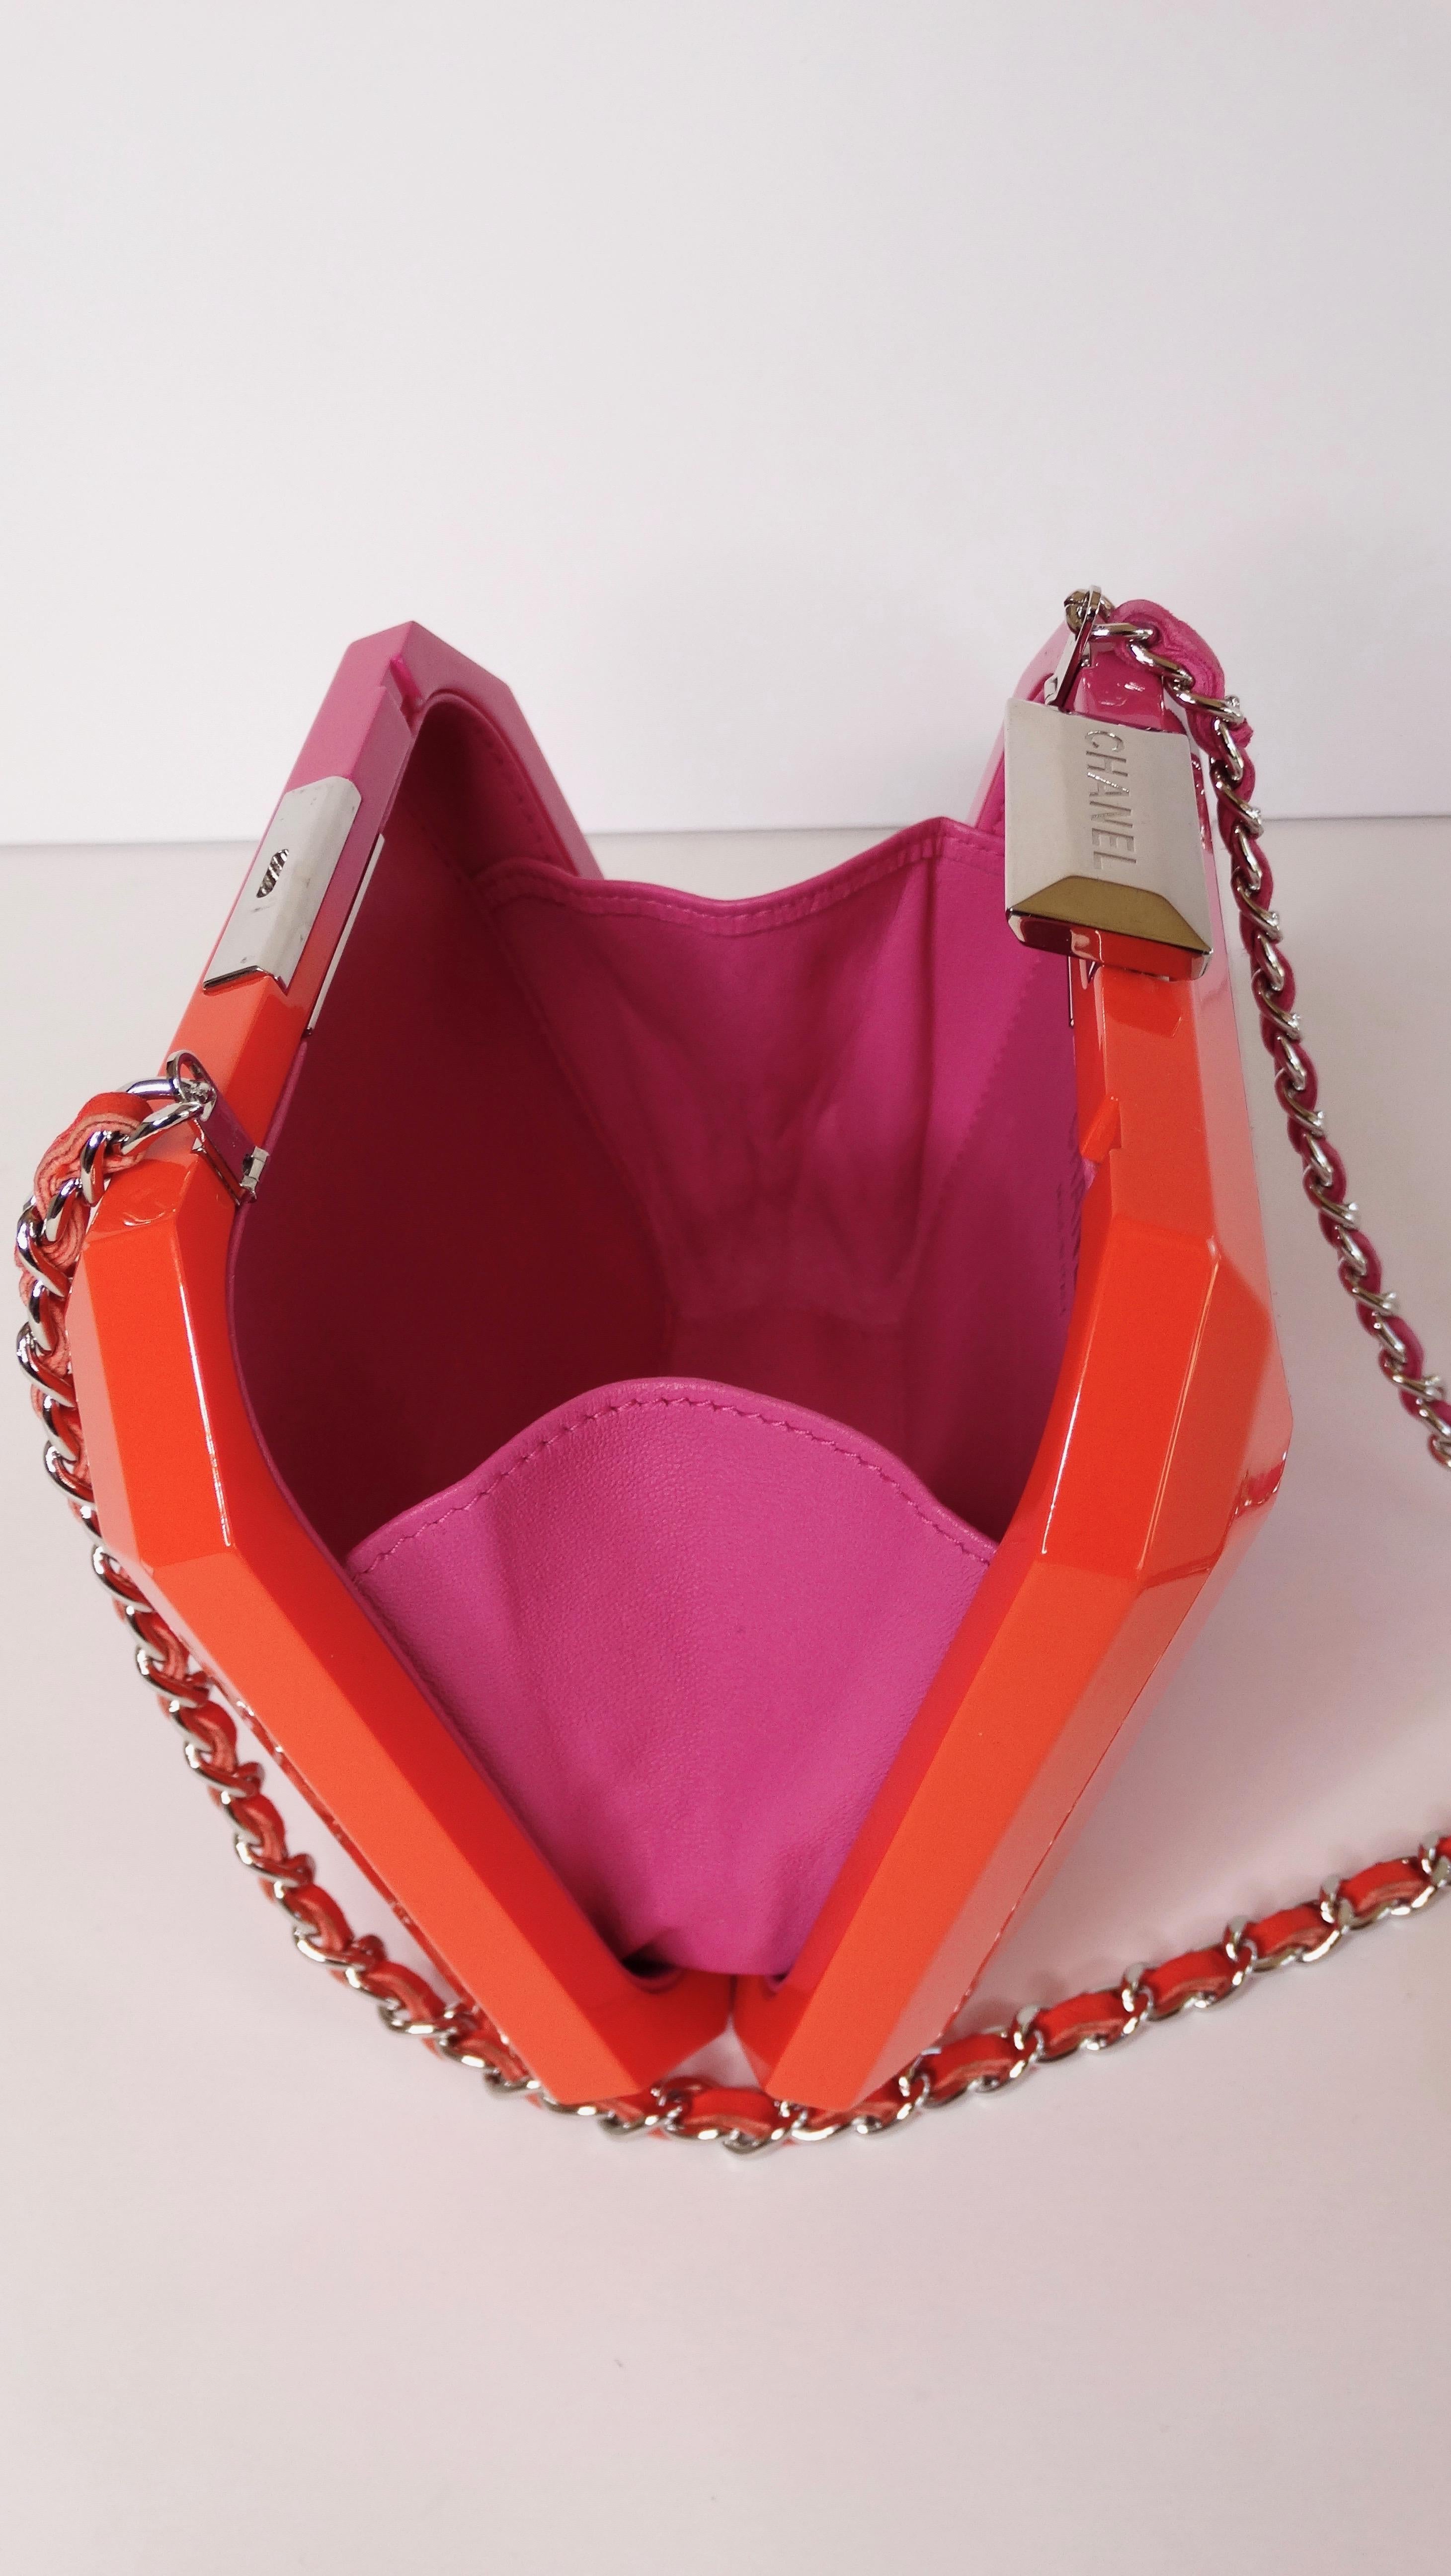 Chanel Runway Minaudière Ombre Pink & Orange Hard Shell Handbag 4